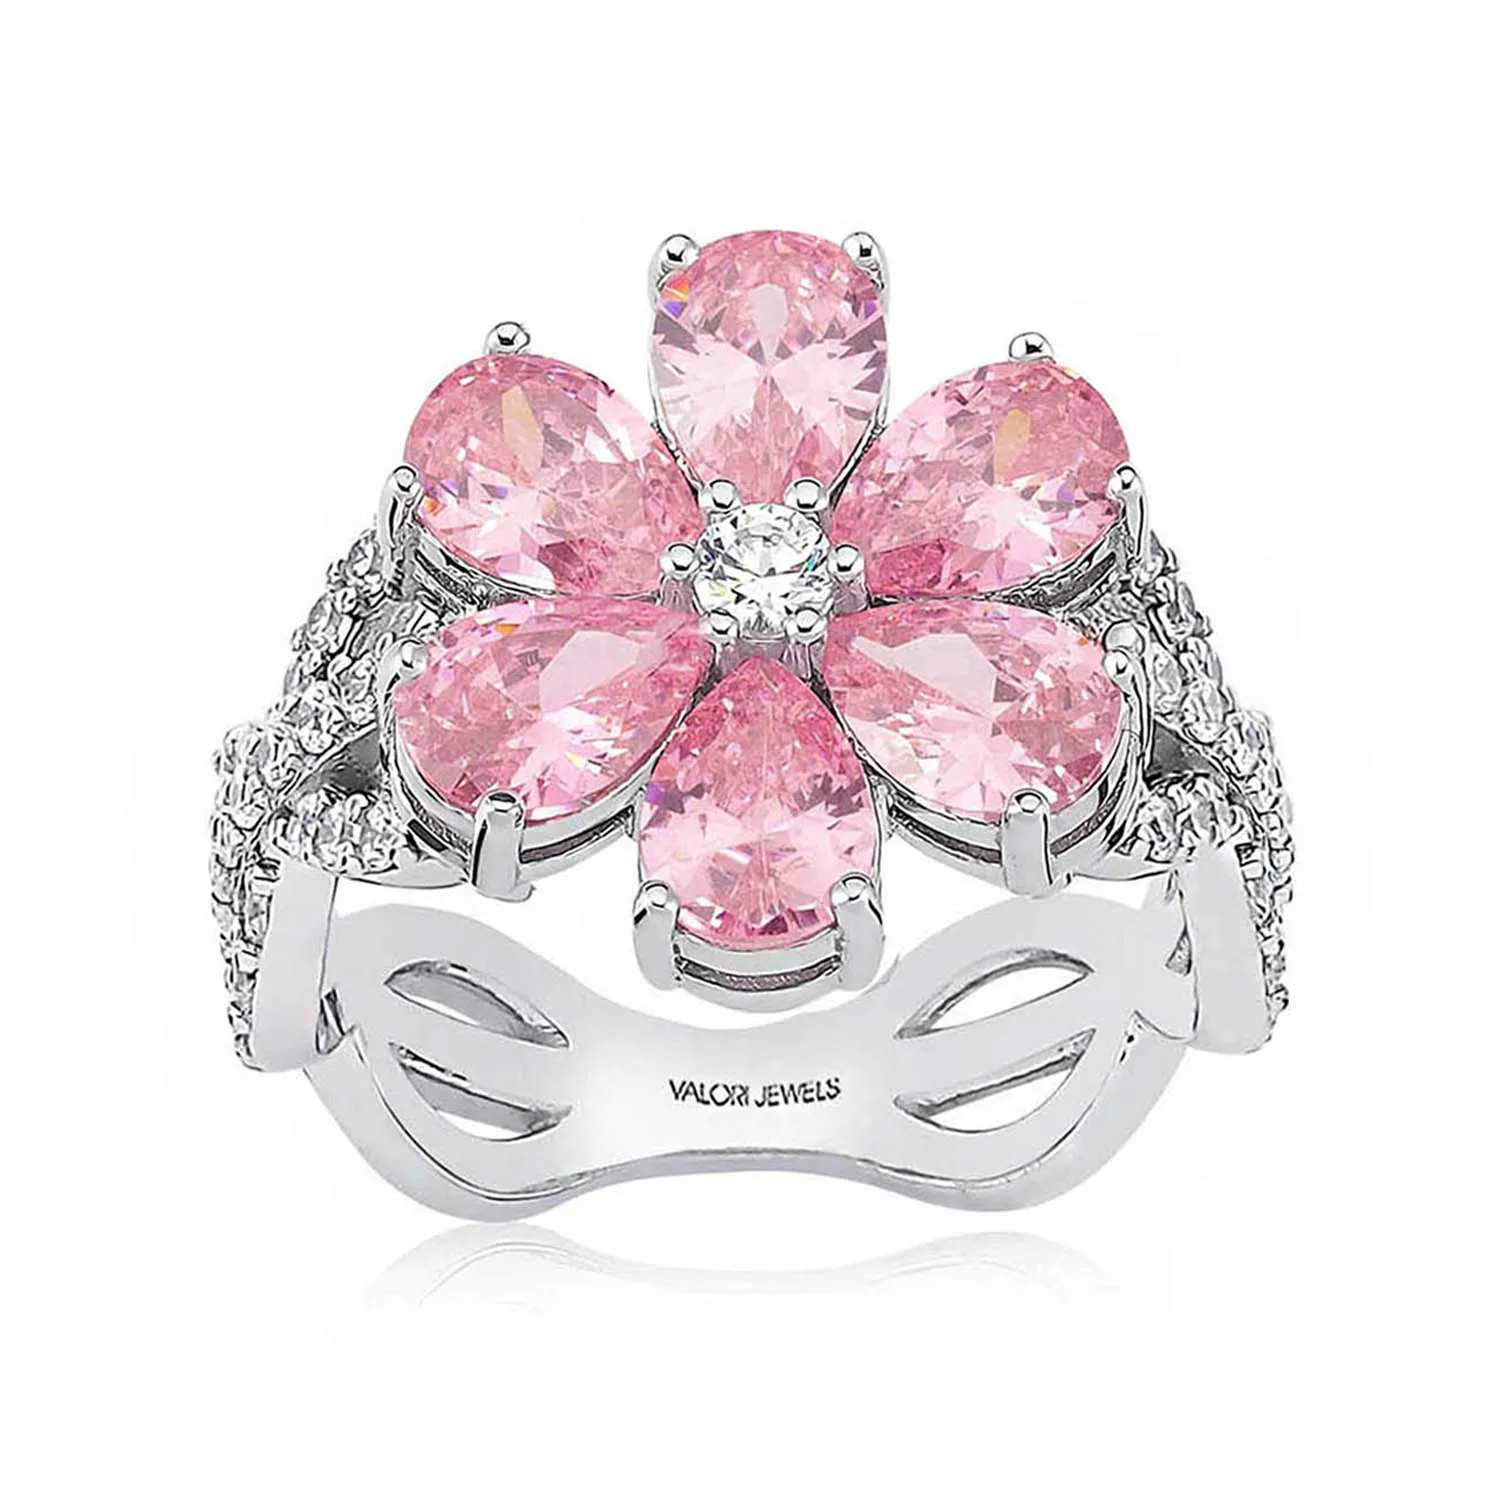 Valori Jewels Magnolia Flower Ring, 2 Ct Zircon Pink Pear Gemstone, Rhodium Plated, 925 Silver, Fine Jewelry